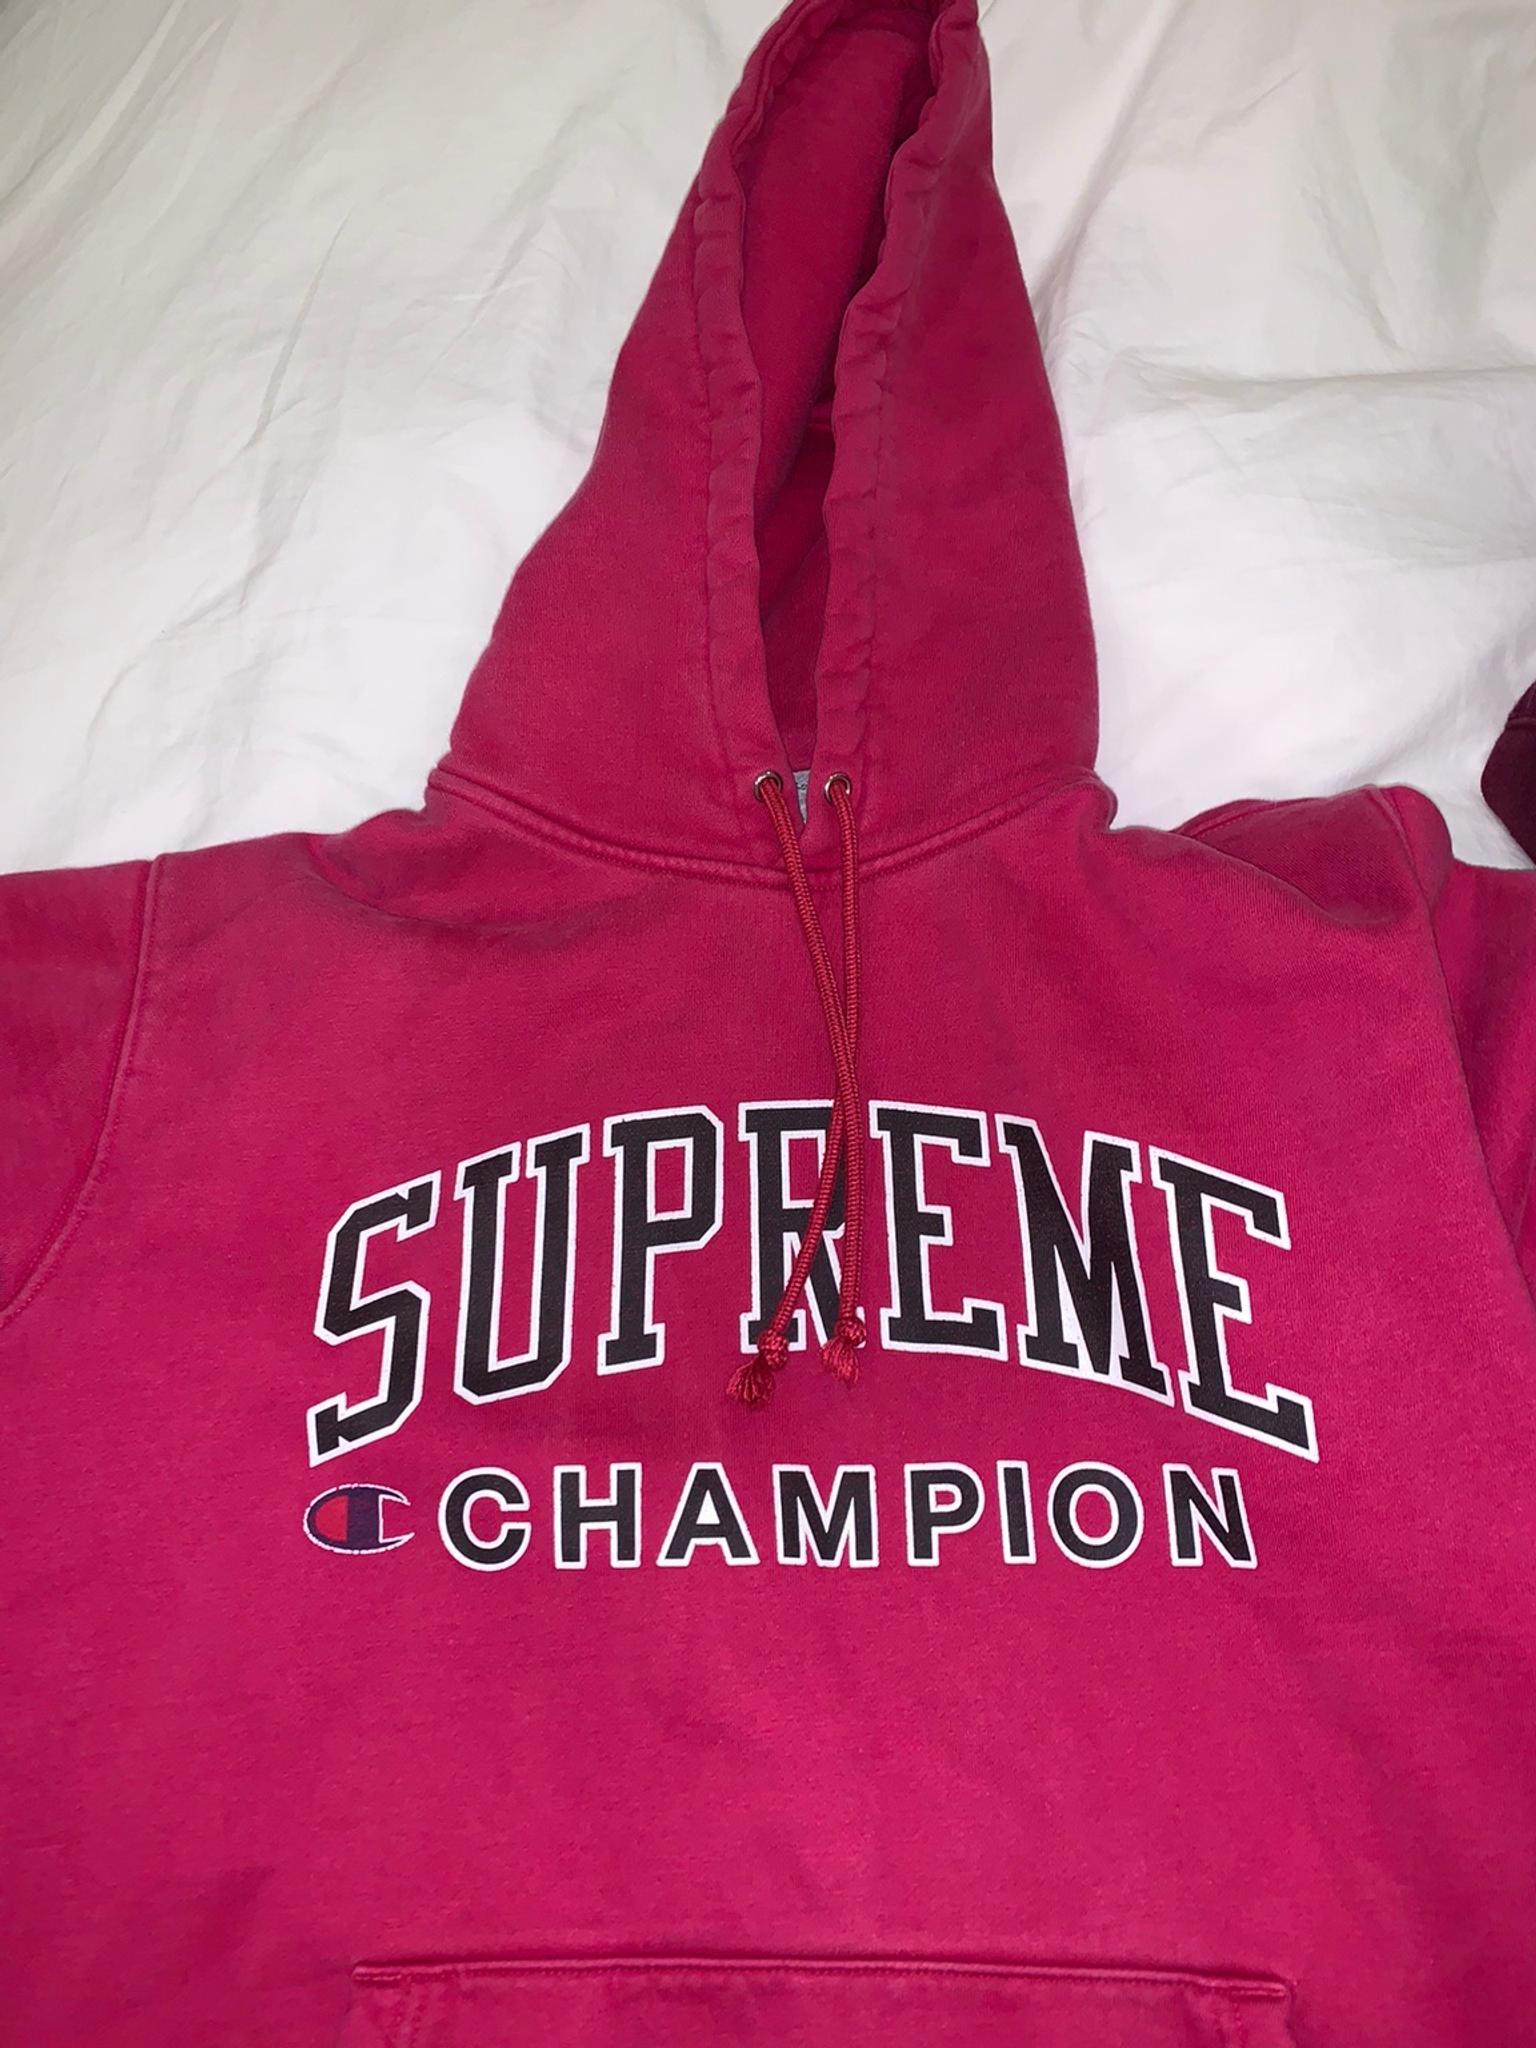 supreme x champion hoodie price